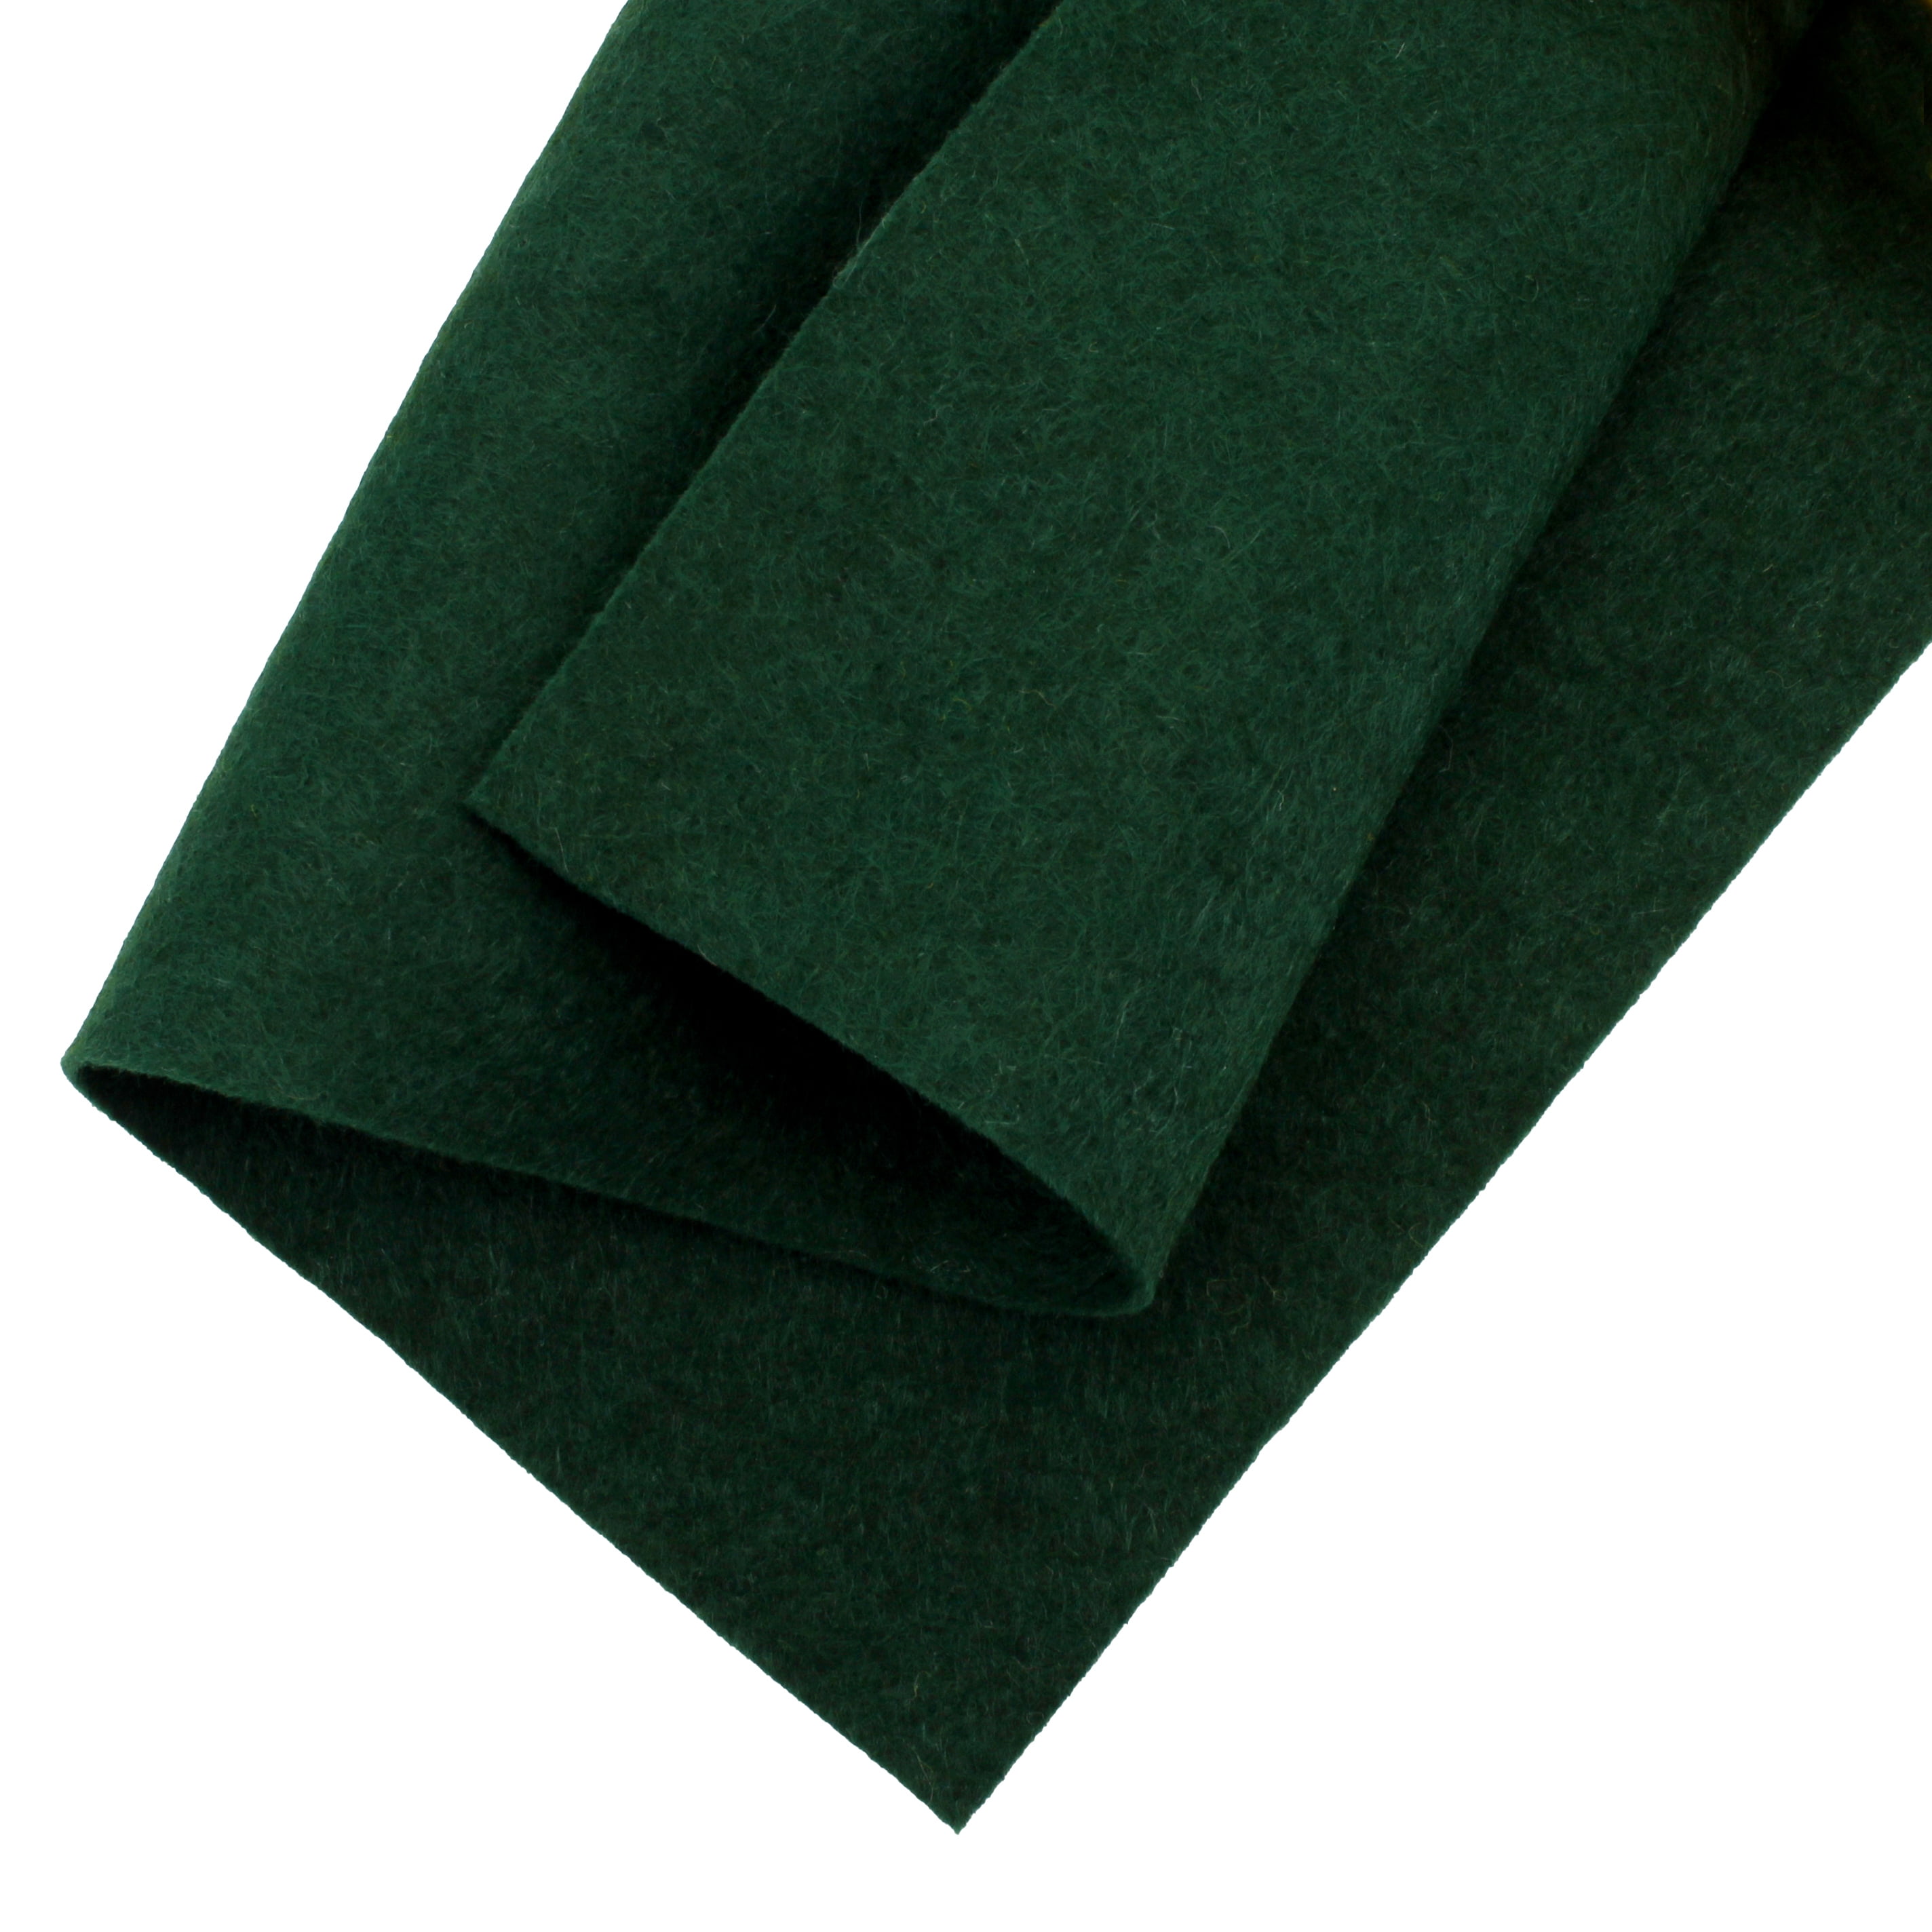  HBC Merino Wool Blend Felt Crafting Sheets Adhesive Backed (8  5/8 x 11 5/8) - Black